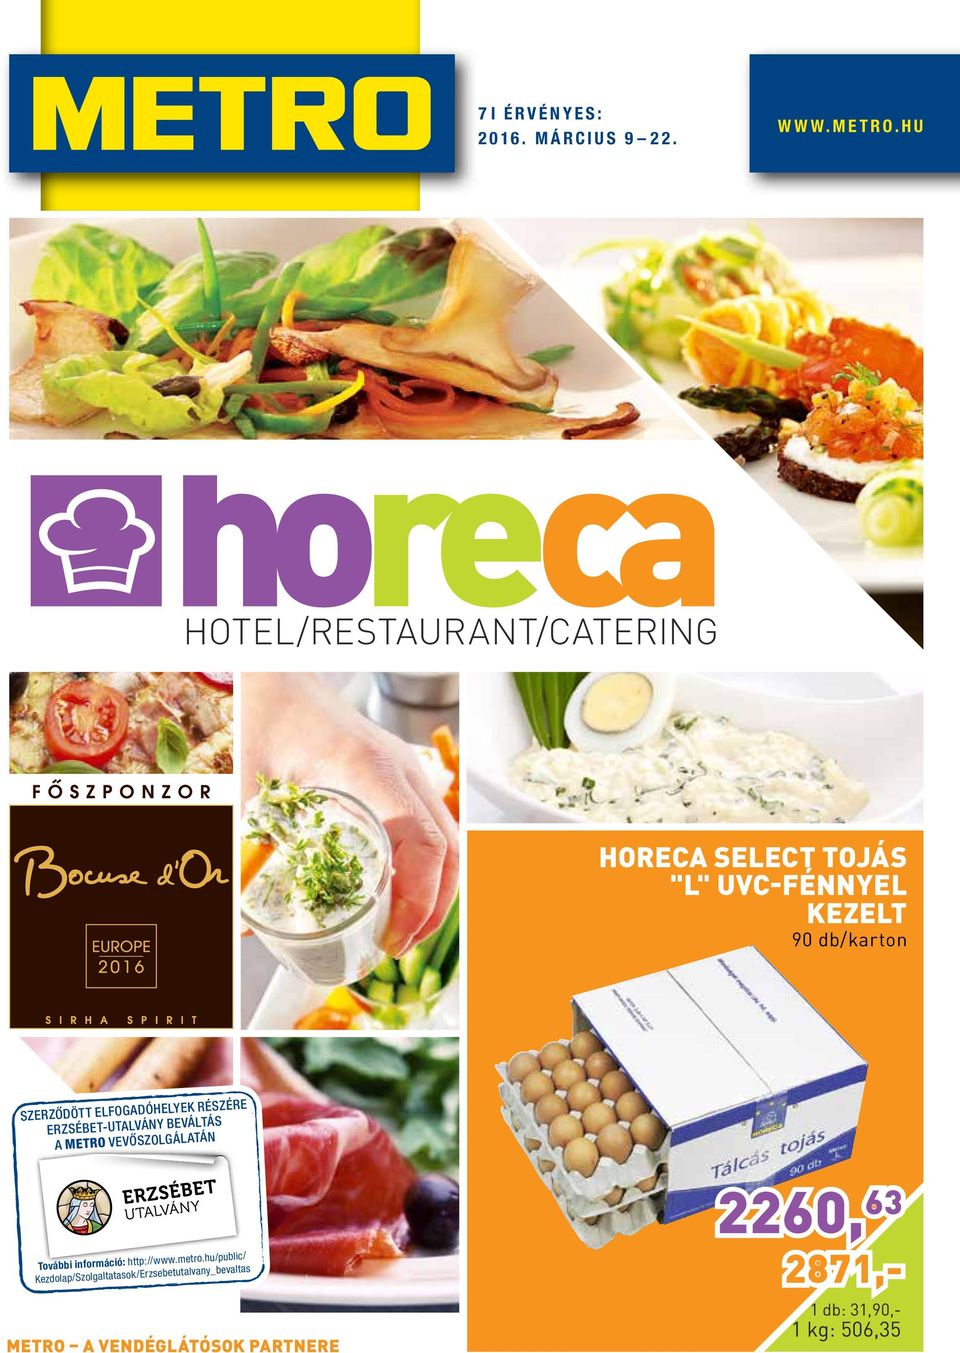 2260, ,- Hotel/Restaurant/Catering. Horeca Select tojás db/karton. 7 I É R  V É N Y E S : március - PDF Free Download